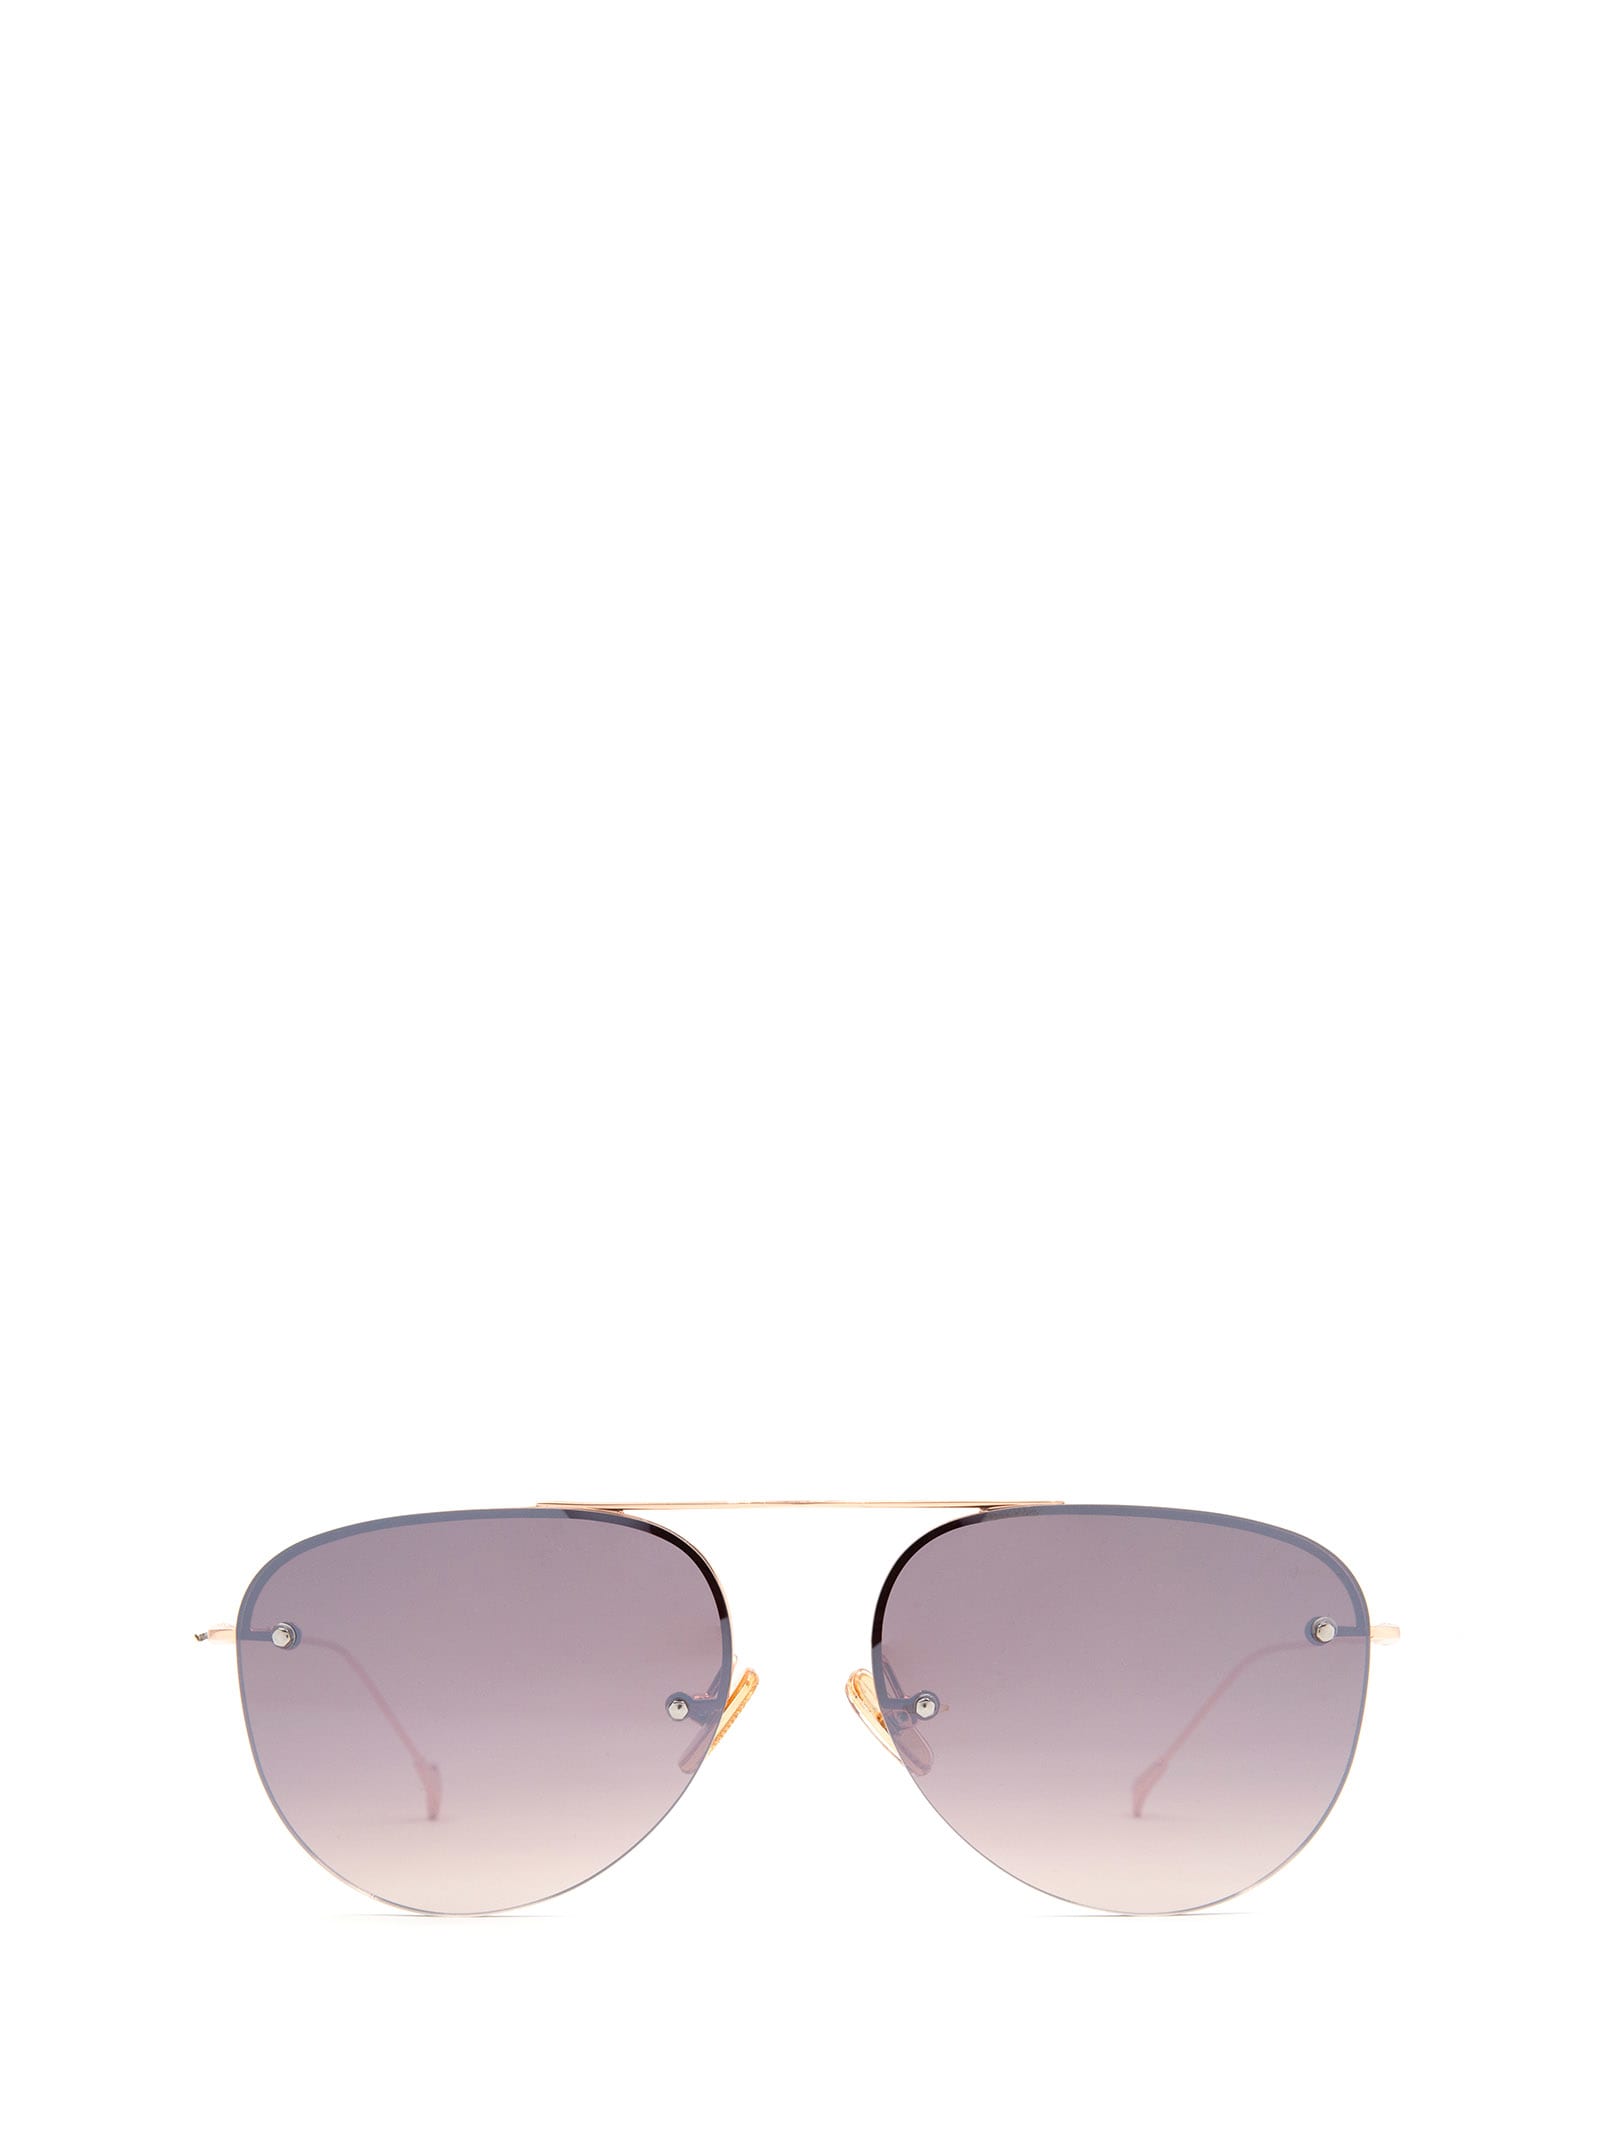 Shop Eyepetizer Player Rose Gold Sunglasses